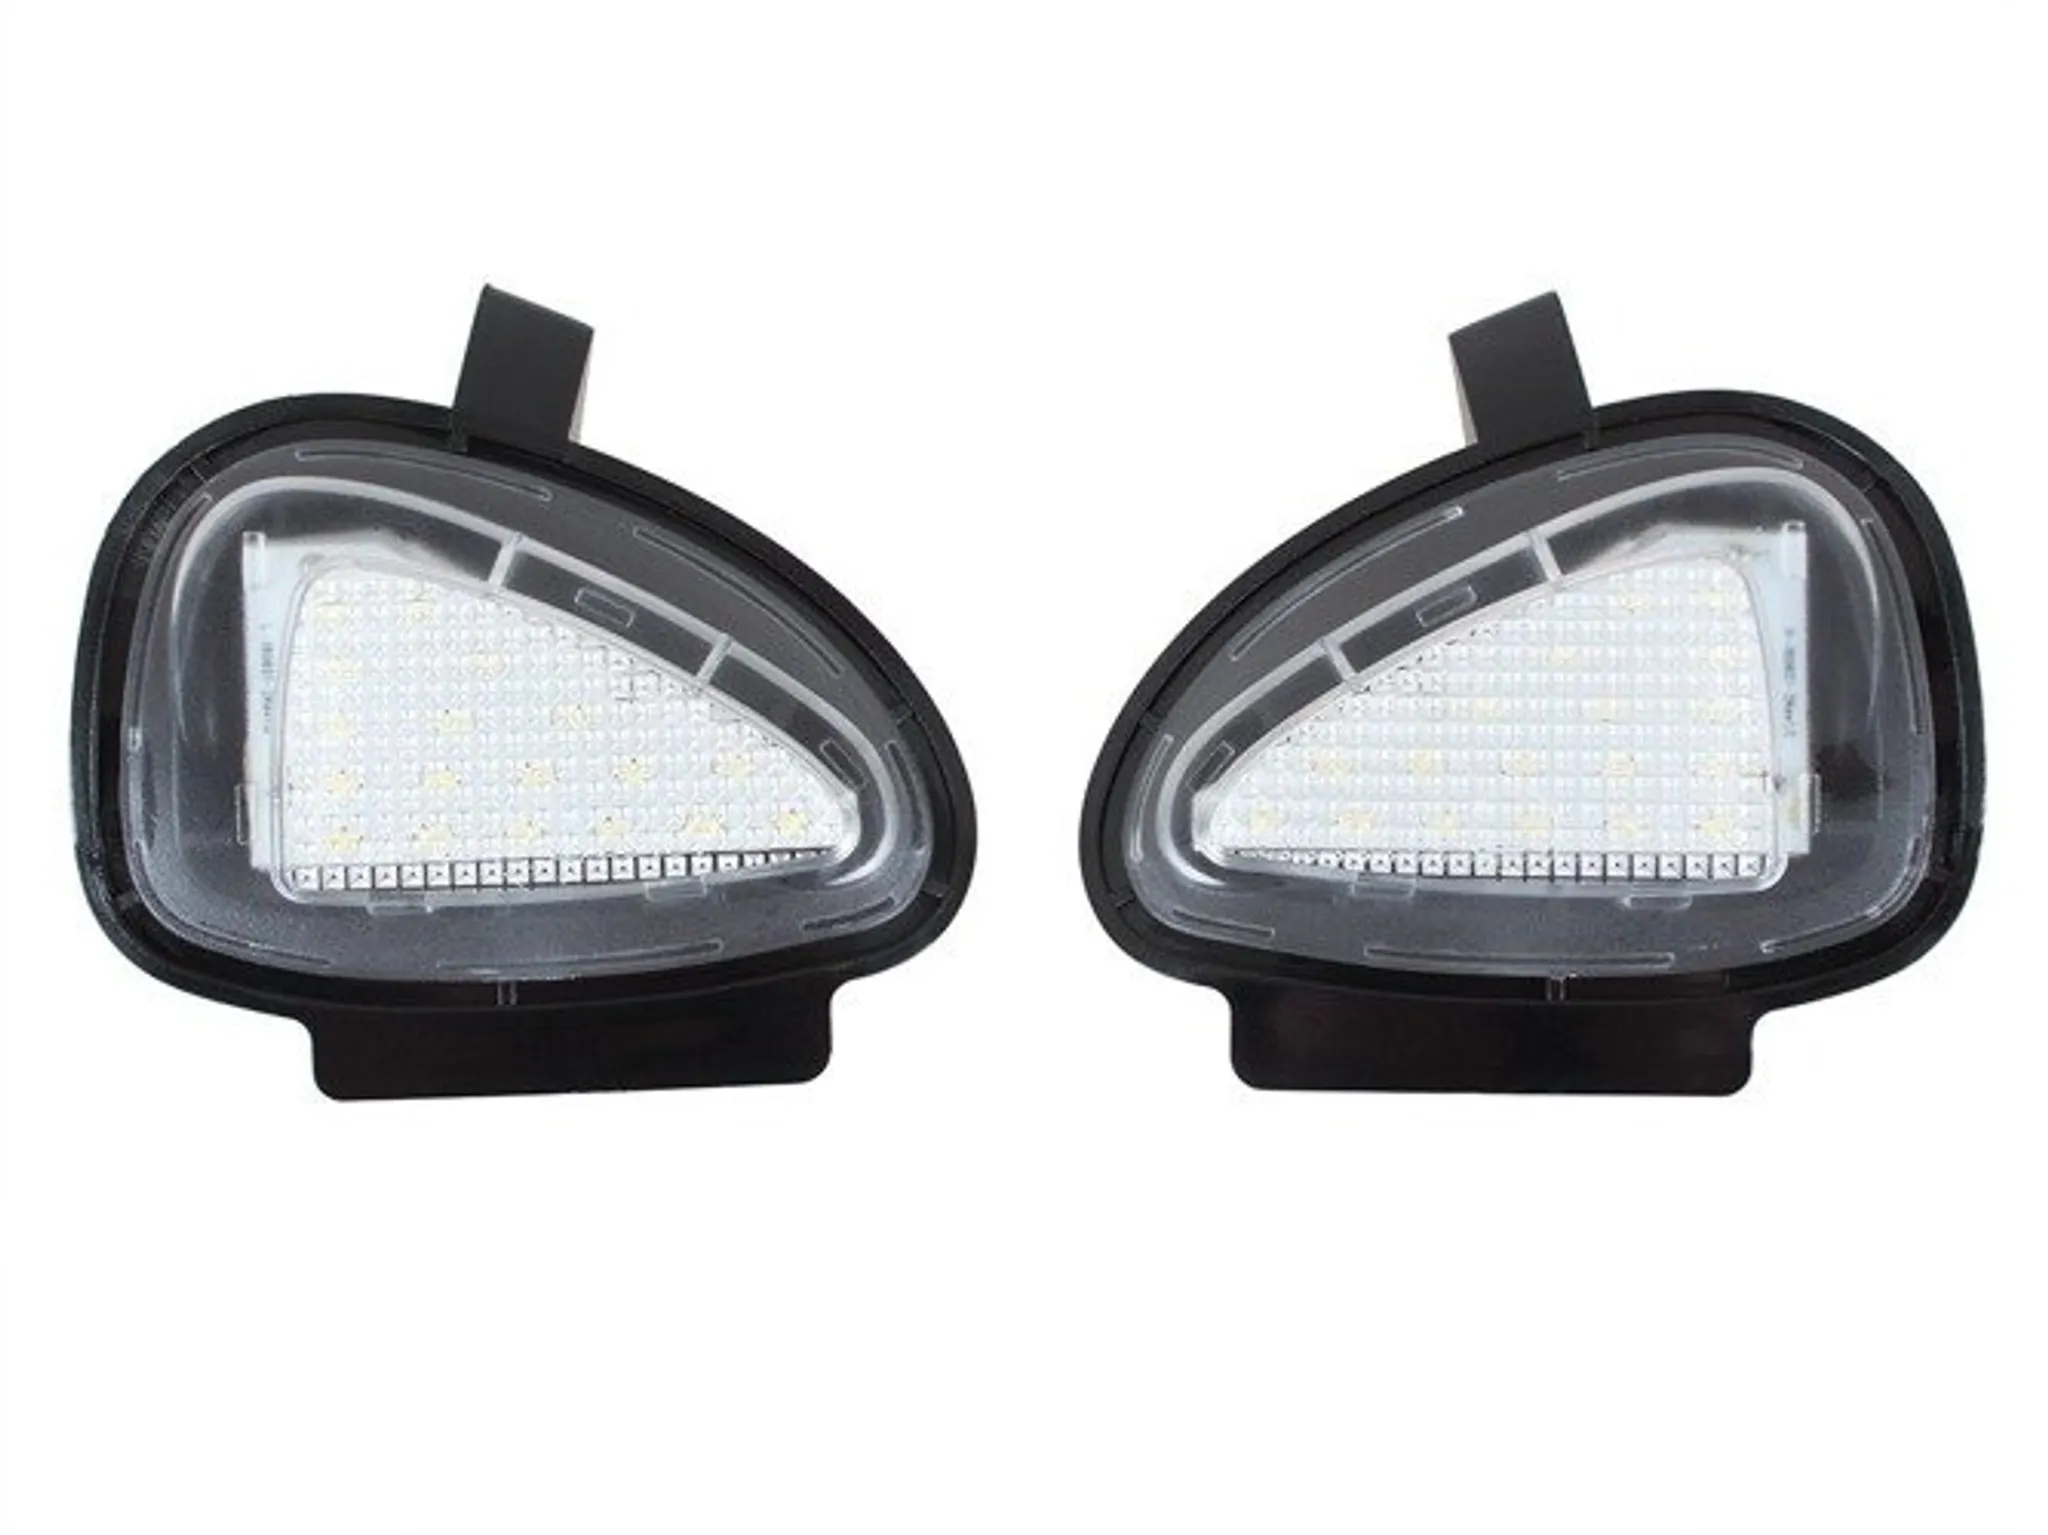 2X LED Aussen Spiegel Umfeldbeleuchtung Umgebungslicht für Vw Golf